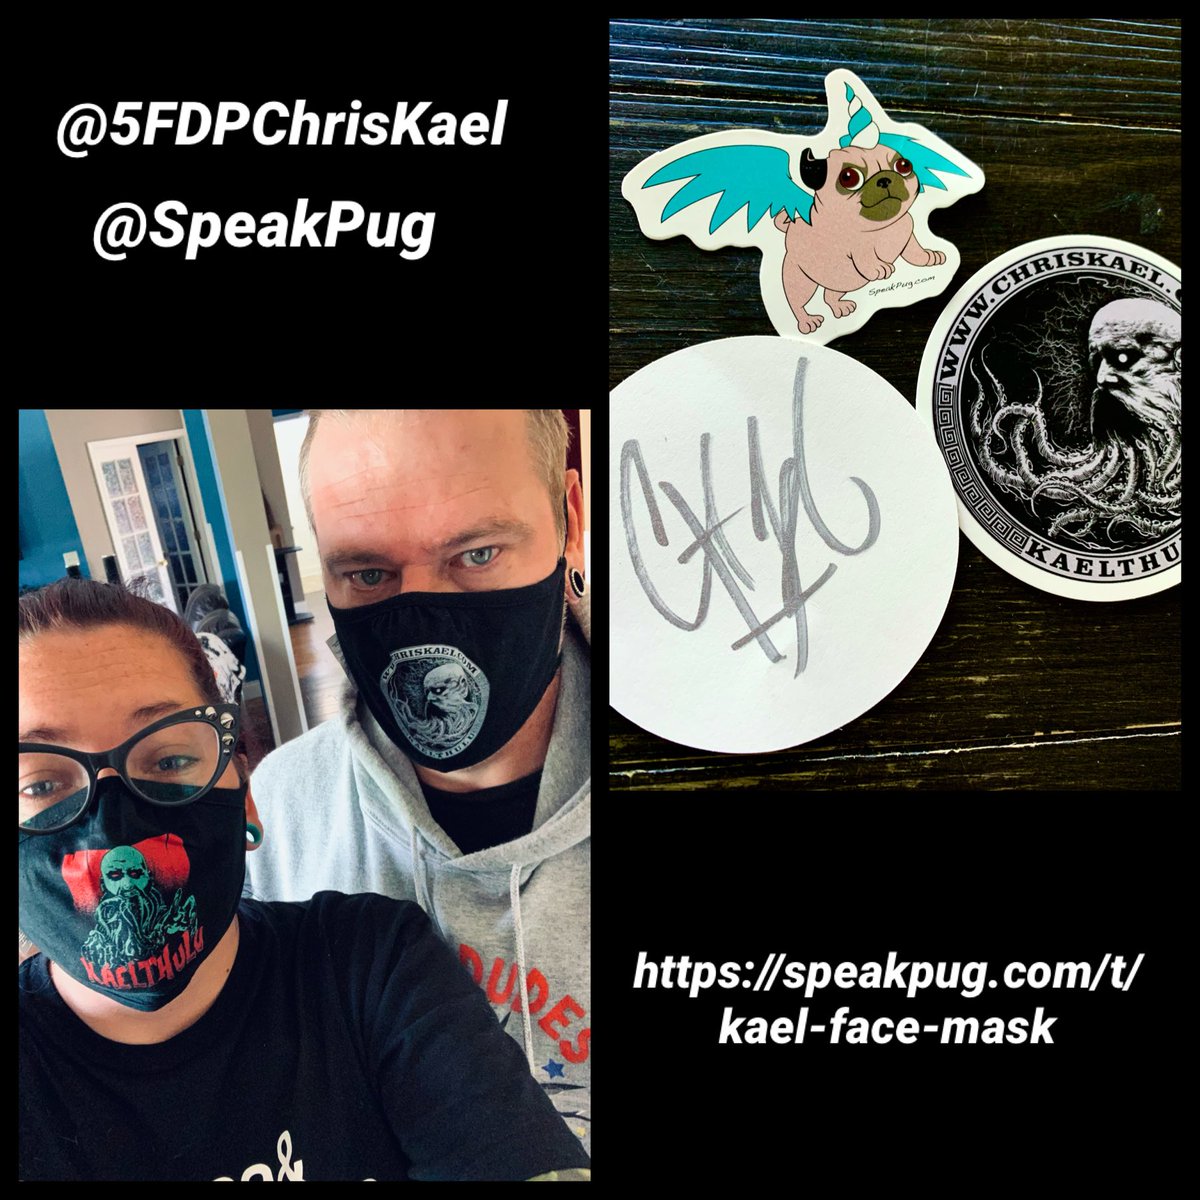 Go grab your #kaelthulu masks at @SpeakPug @5FDPChrisKael #shityesson